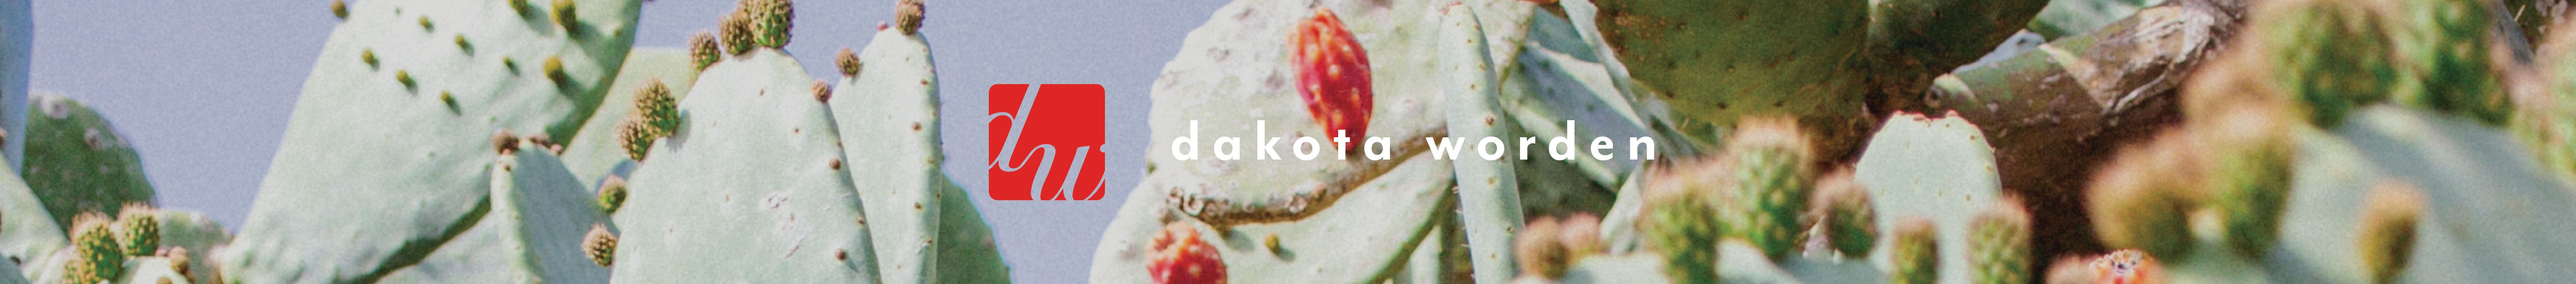 Dakota Worden's profile banner